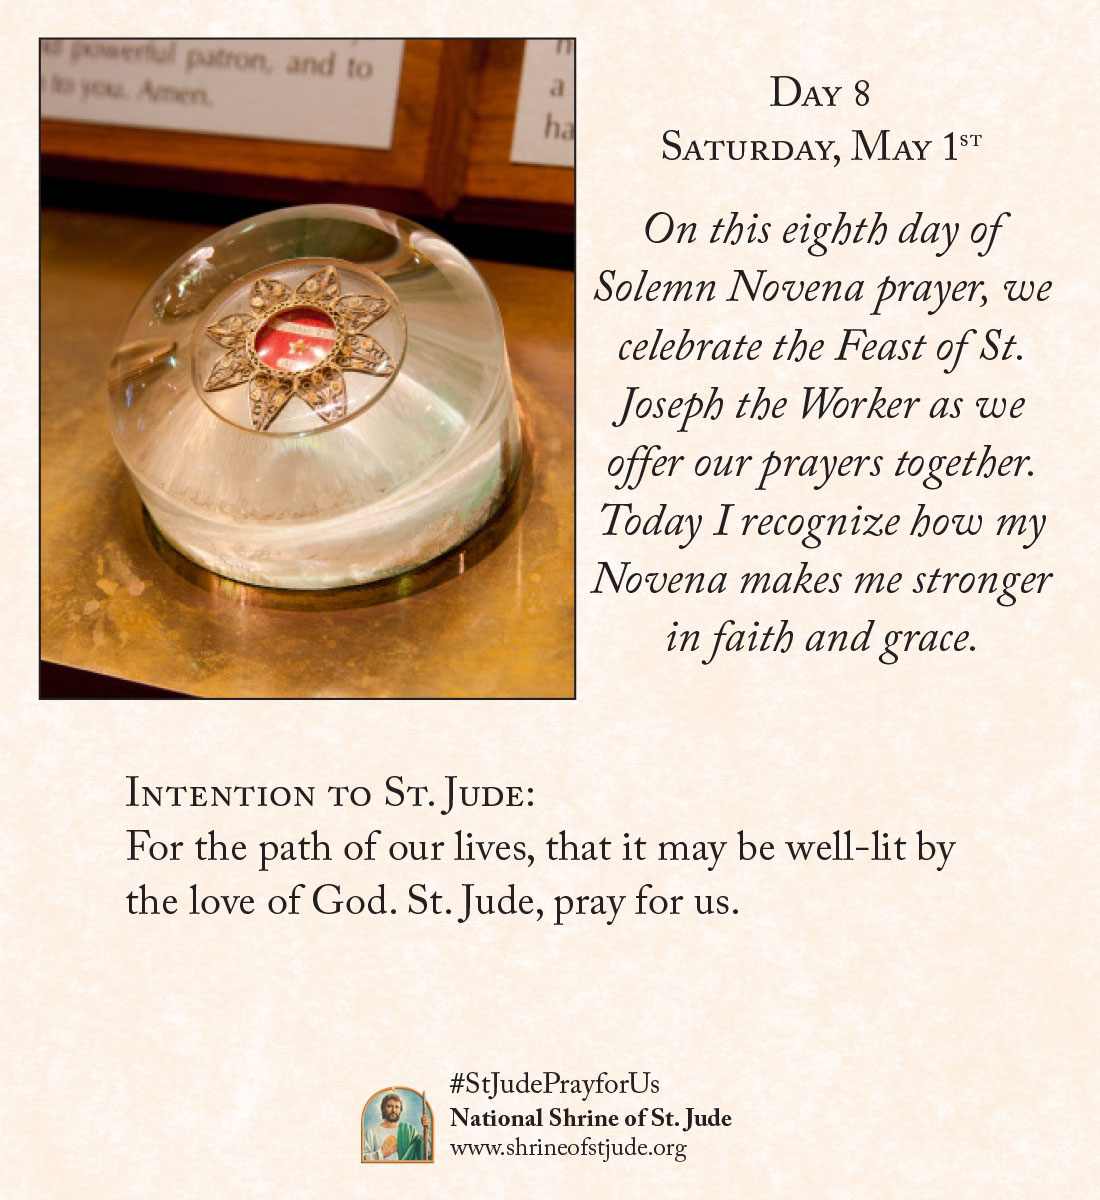 Day 8 - Spring Solemn Novena to St. Jude

Video: bit.ly/8aprilnovena21
Meditations: bit.ly/springnovena
-
#novena #stjude #saintjude #prayer #pray #hope #intention #petition #catholic #God #feast #feastday #stjosephtheworker #stronger #faith #grace #love #StJudePrayForUs